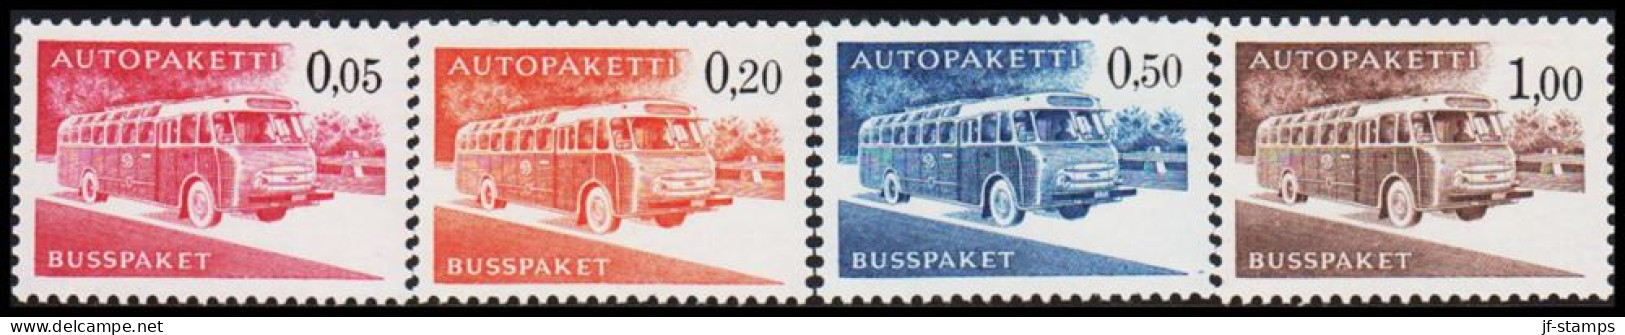 1963-1980. FINLAND. Mail Bus. Complete Set AUTOPAKETTI - BUSSPAKET Never Hinged. Normal... (Michel AP 10-13x) - JF535612 - Pakjes Per Postbus